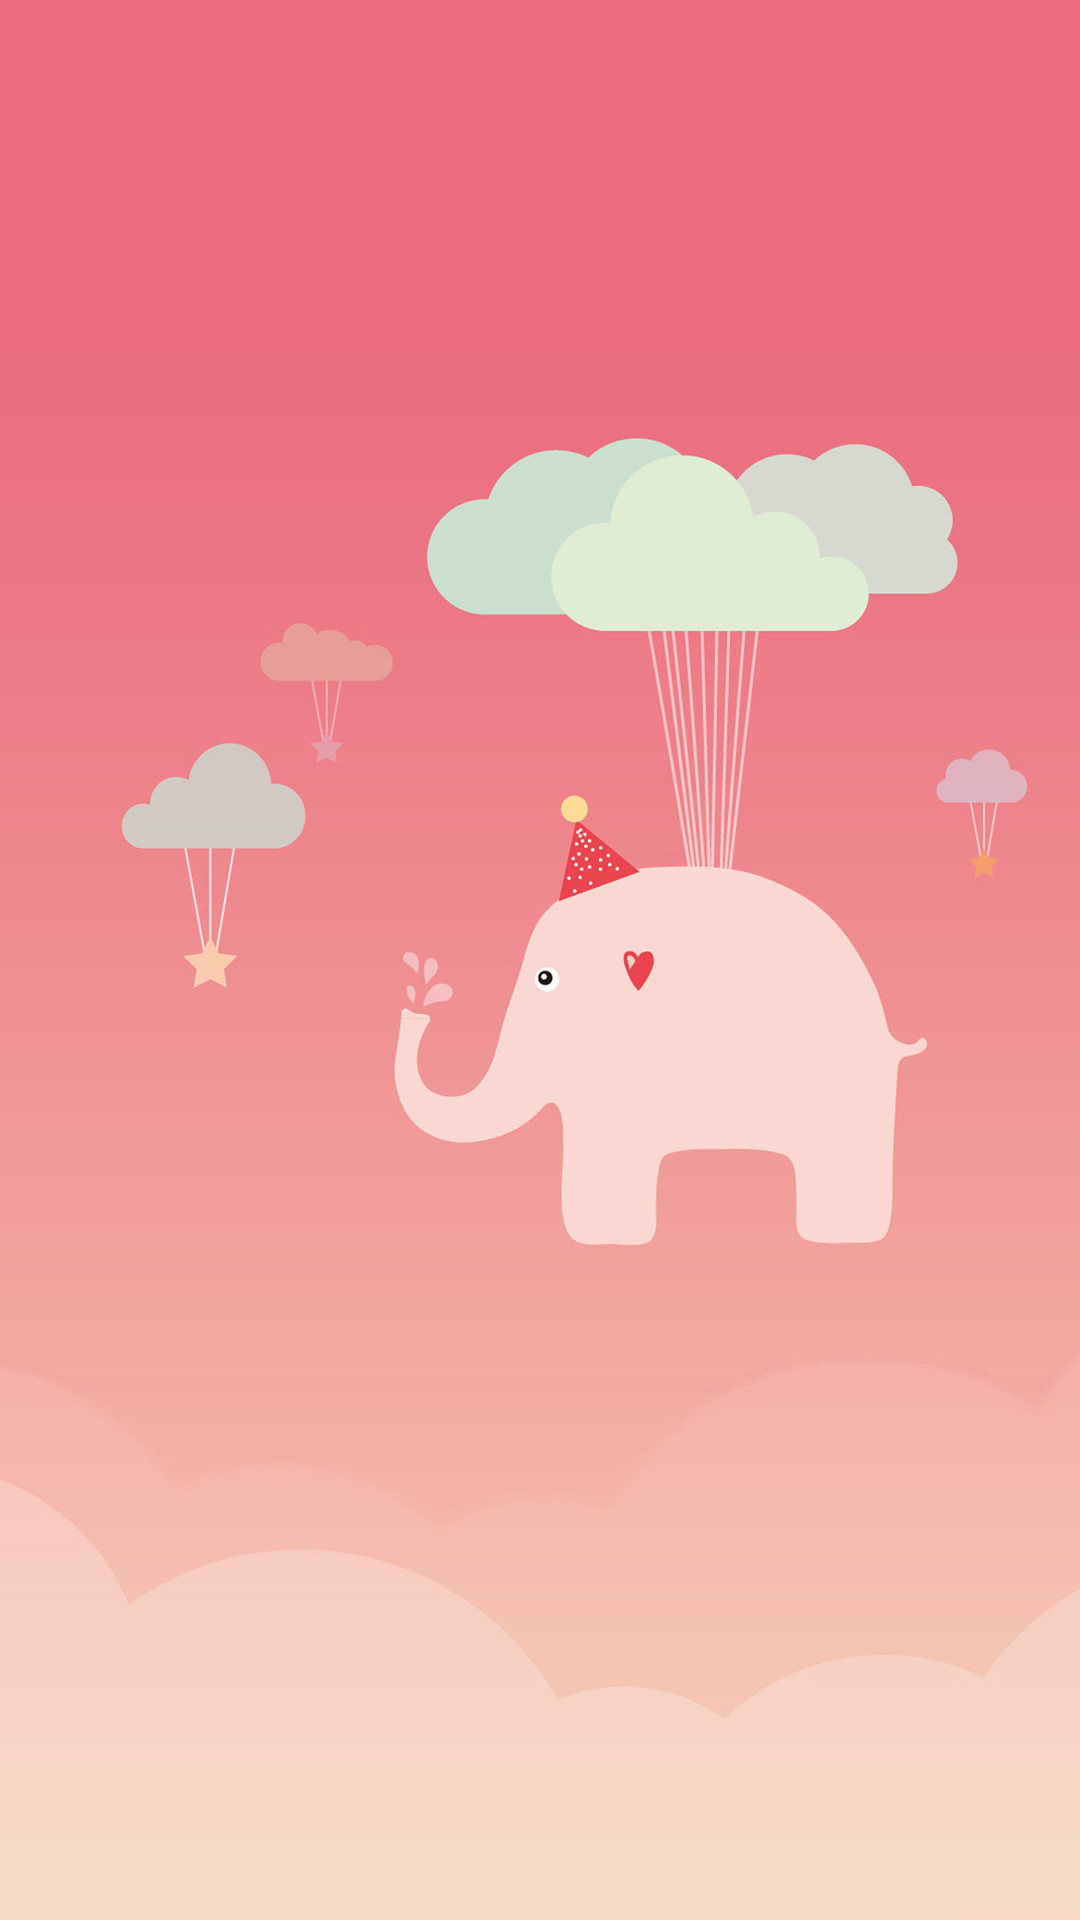 1080x1920 Cute Elephant iPhone 6 Wallpaper Download | iPhone Wallpapers, iPad .